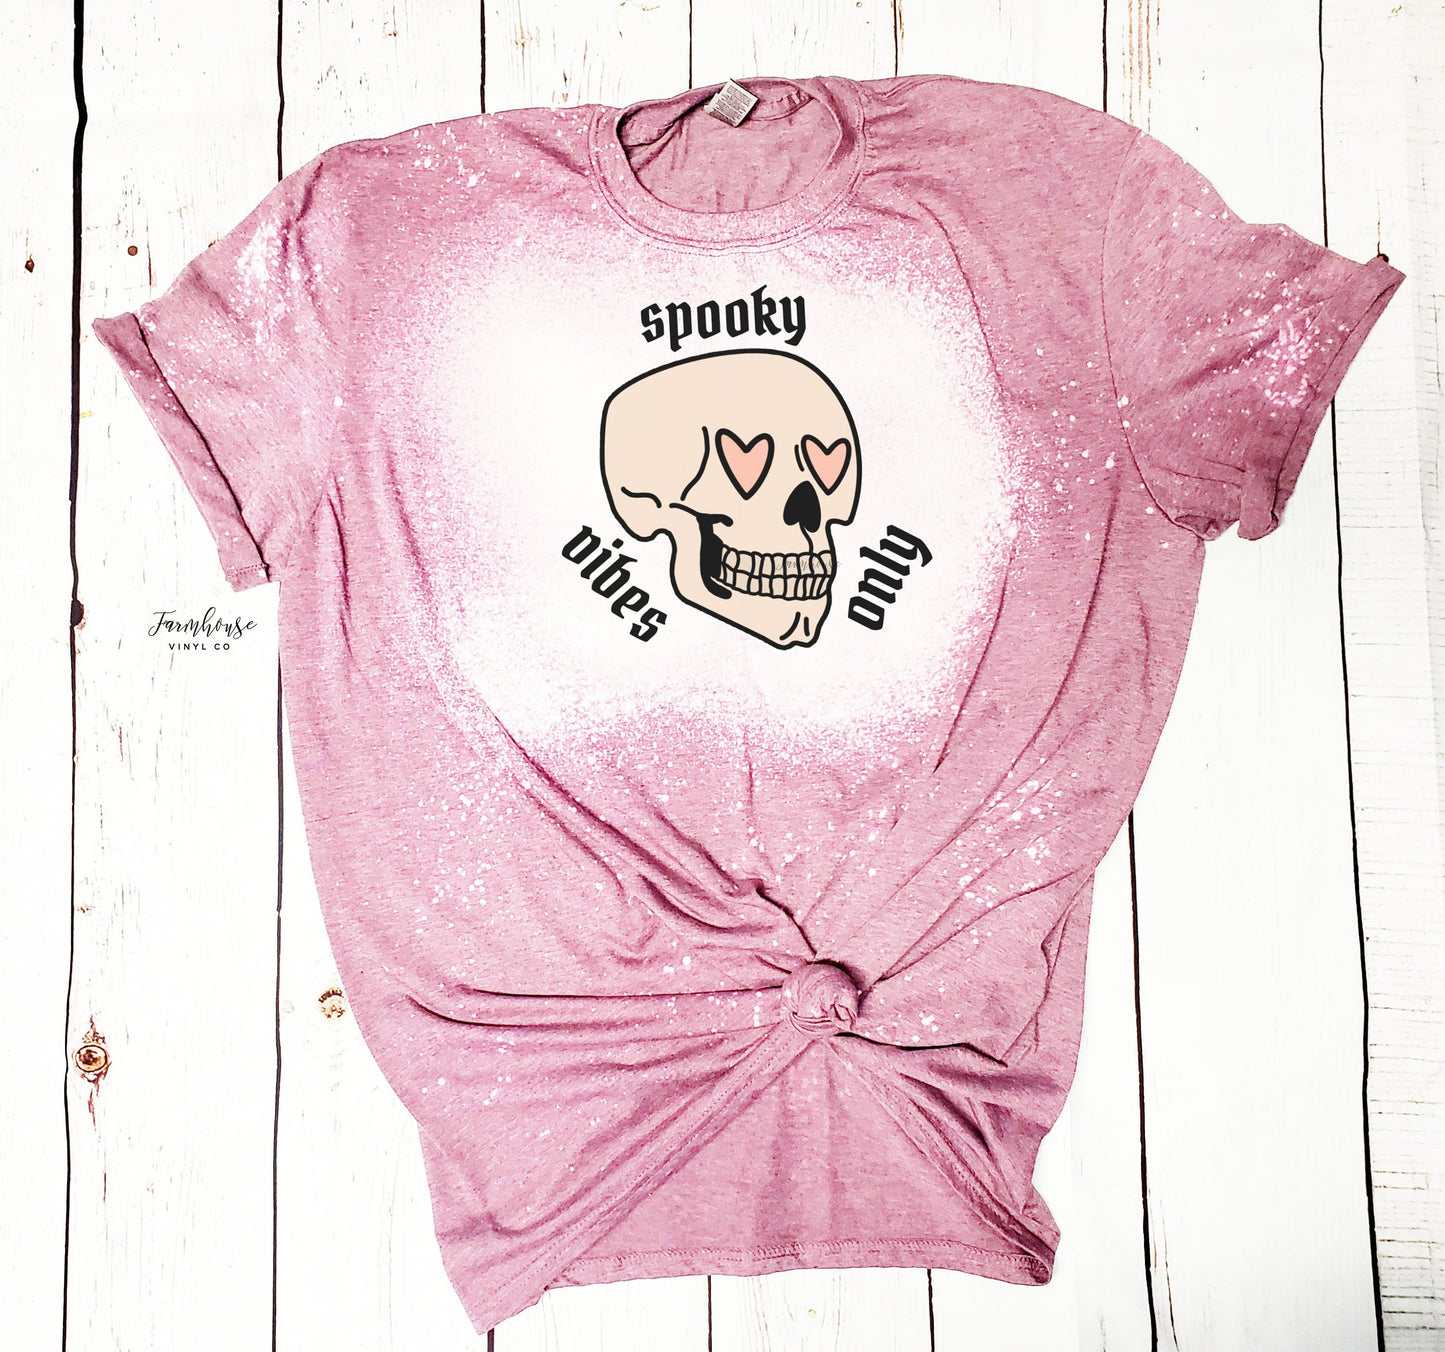 Halloween Skull Spooky Vibes Shirt / Bright Halloween / Fall Shirt for Her / Fall Shirt / Women's Halloween Tee / Skull Shirt - Farmhouse Vinyl Co